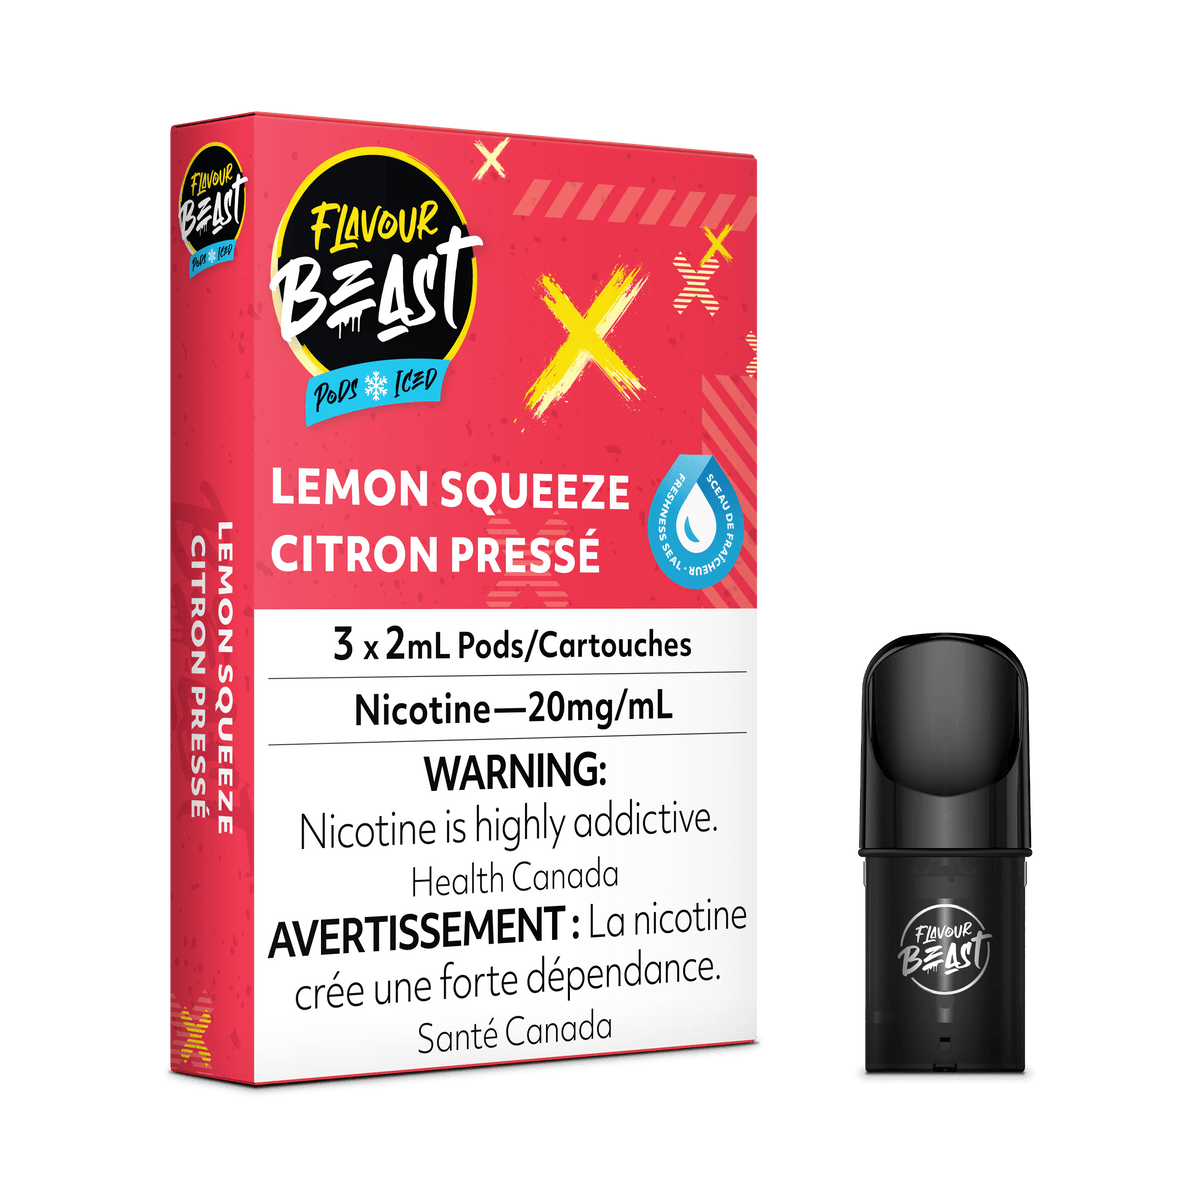 Flavour Beast Vape Pod - Lemon Squeeze Iced available on Canada online vape shop